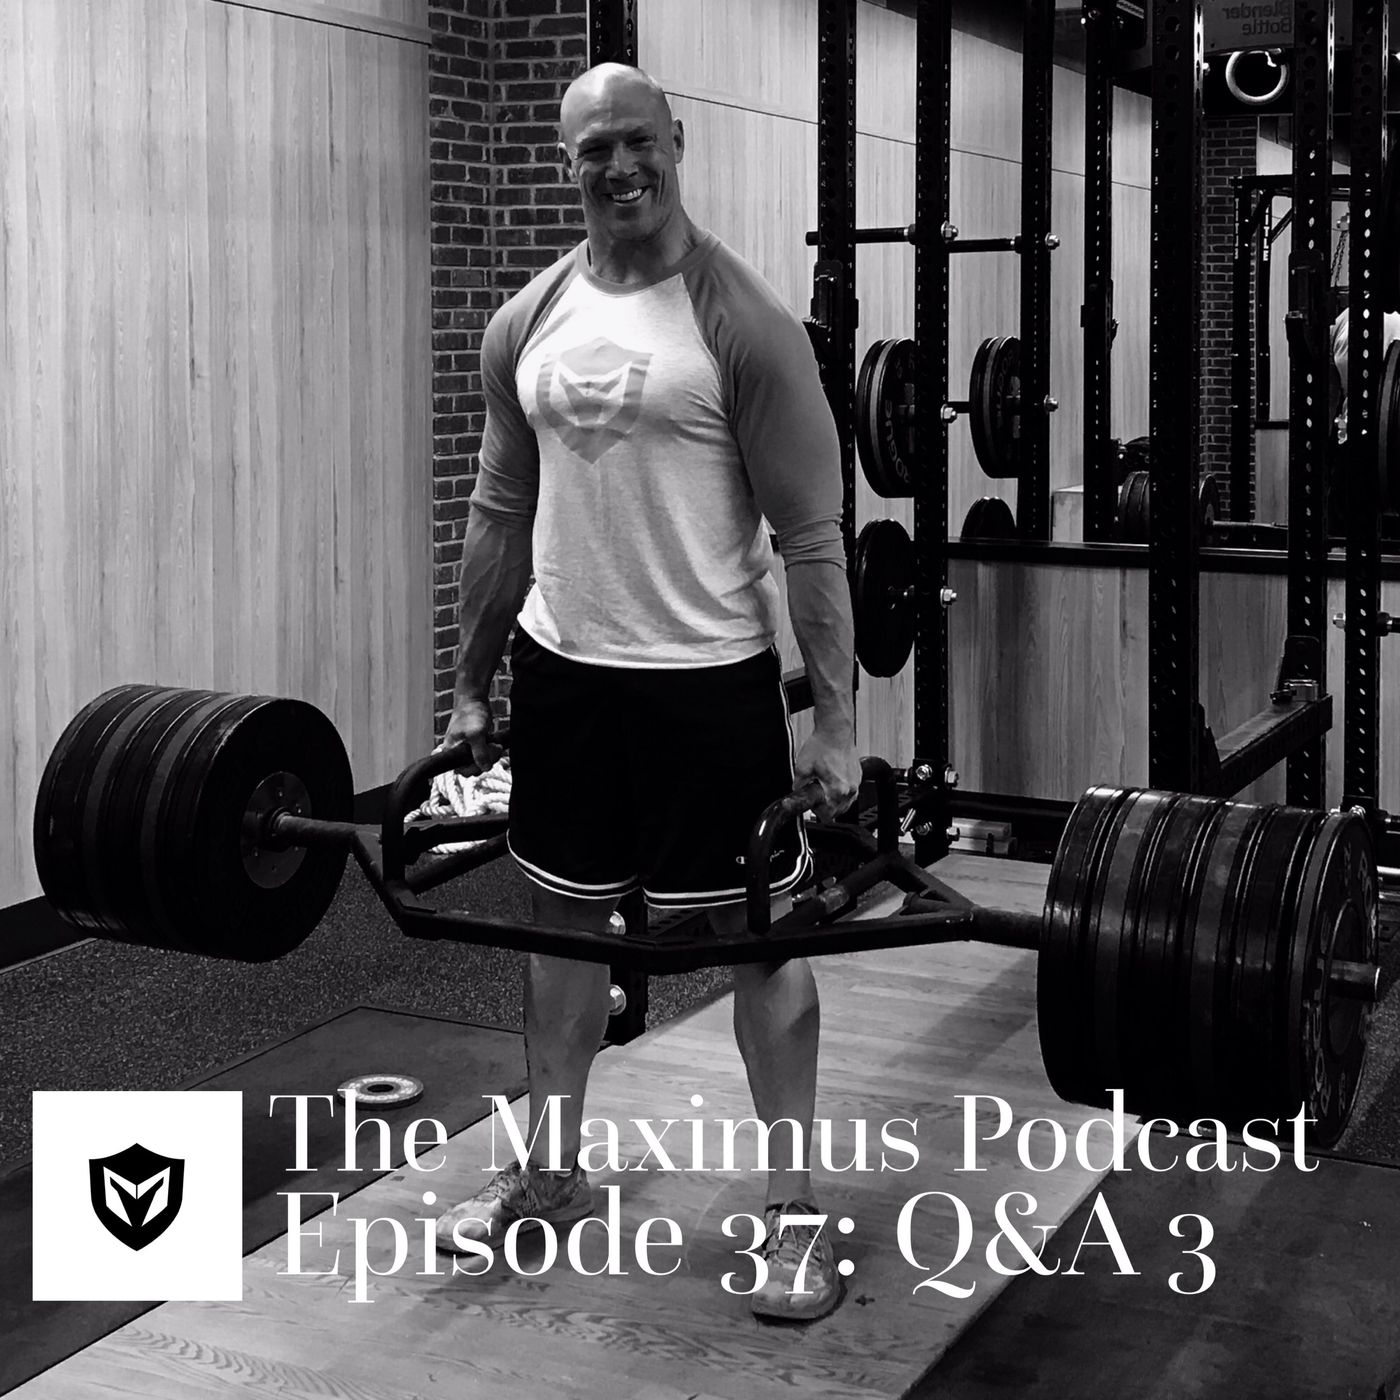 The Maximus Podcast Ep. 37 - Q&A 3